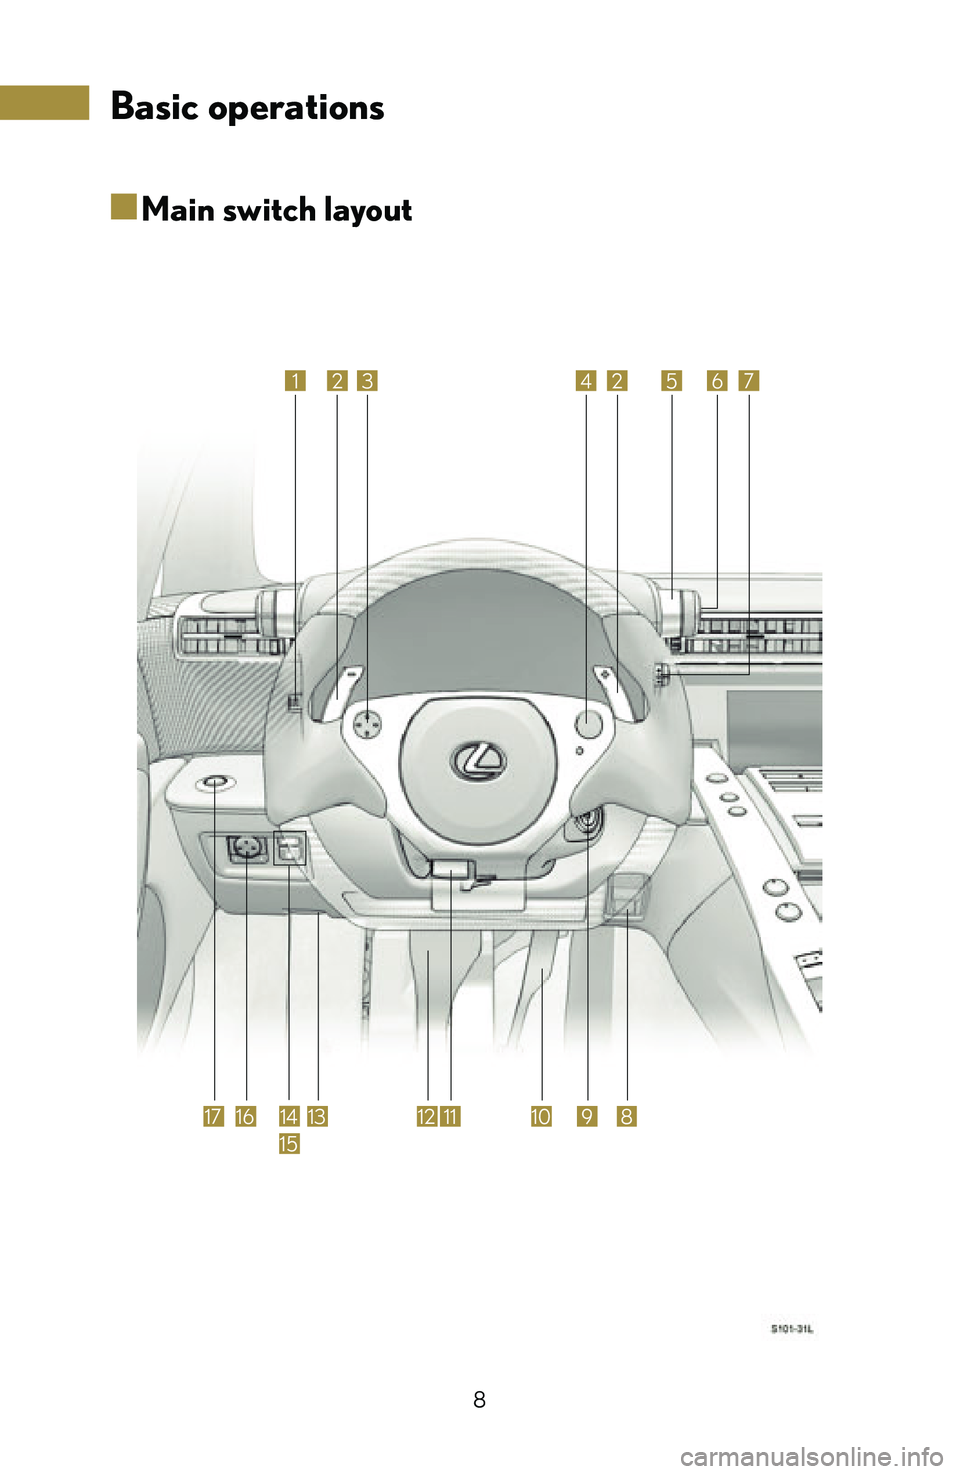 lexus LFA 2012  Owners Manual / LEXUS 2012 LFA: INSIDE THE LFA 8
■
■Main switch layout
1
8910111213141716
2342567
15
Basic operations 